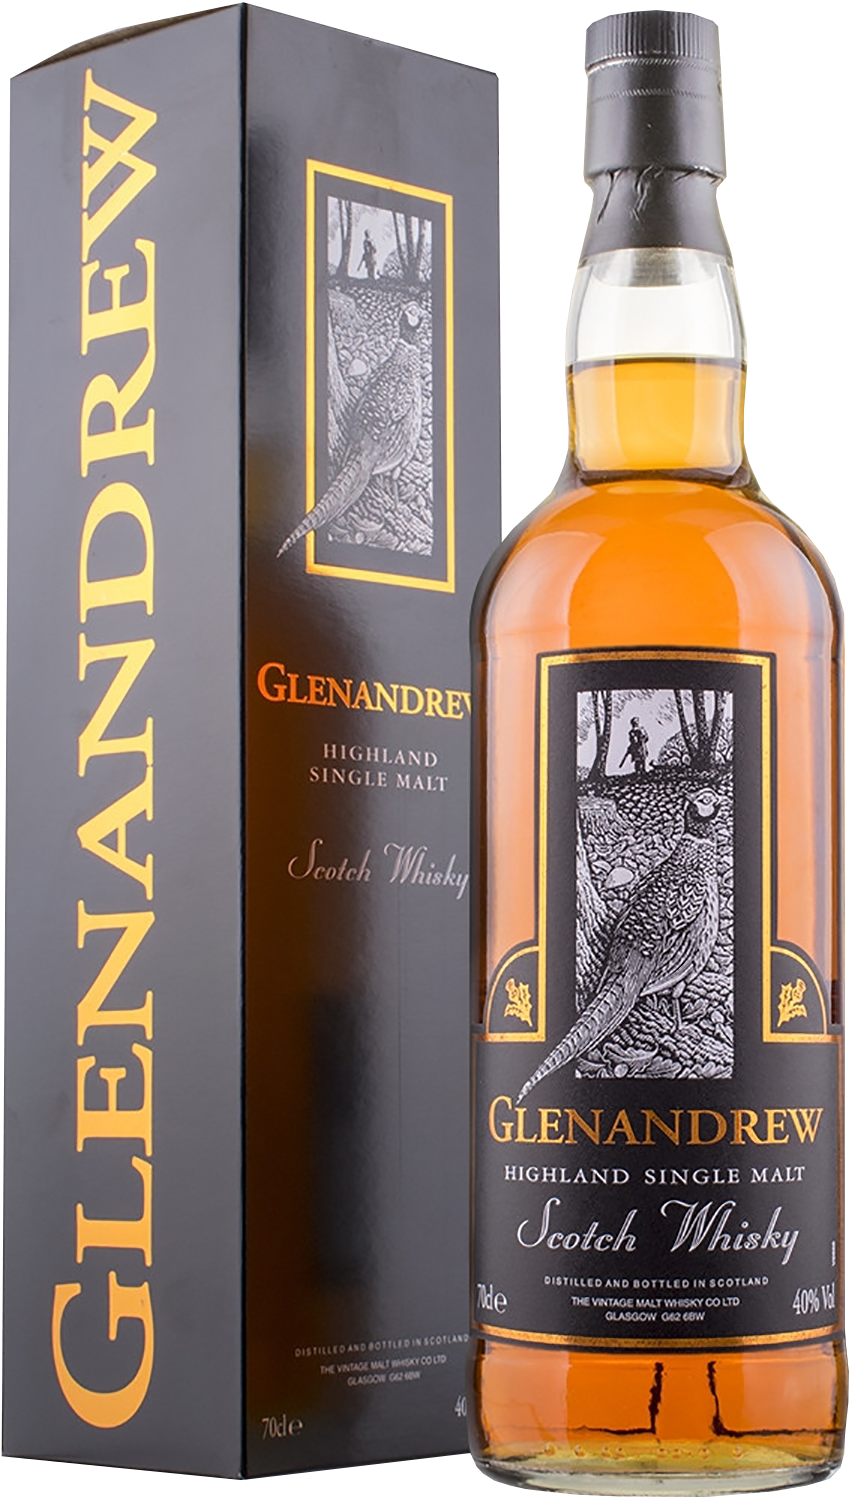 Glenandrew Highland Single Malt Scotch Whisky (gift box) aberfeldy 16 years old highland single malt scotch whisky gift box